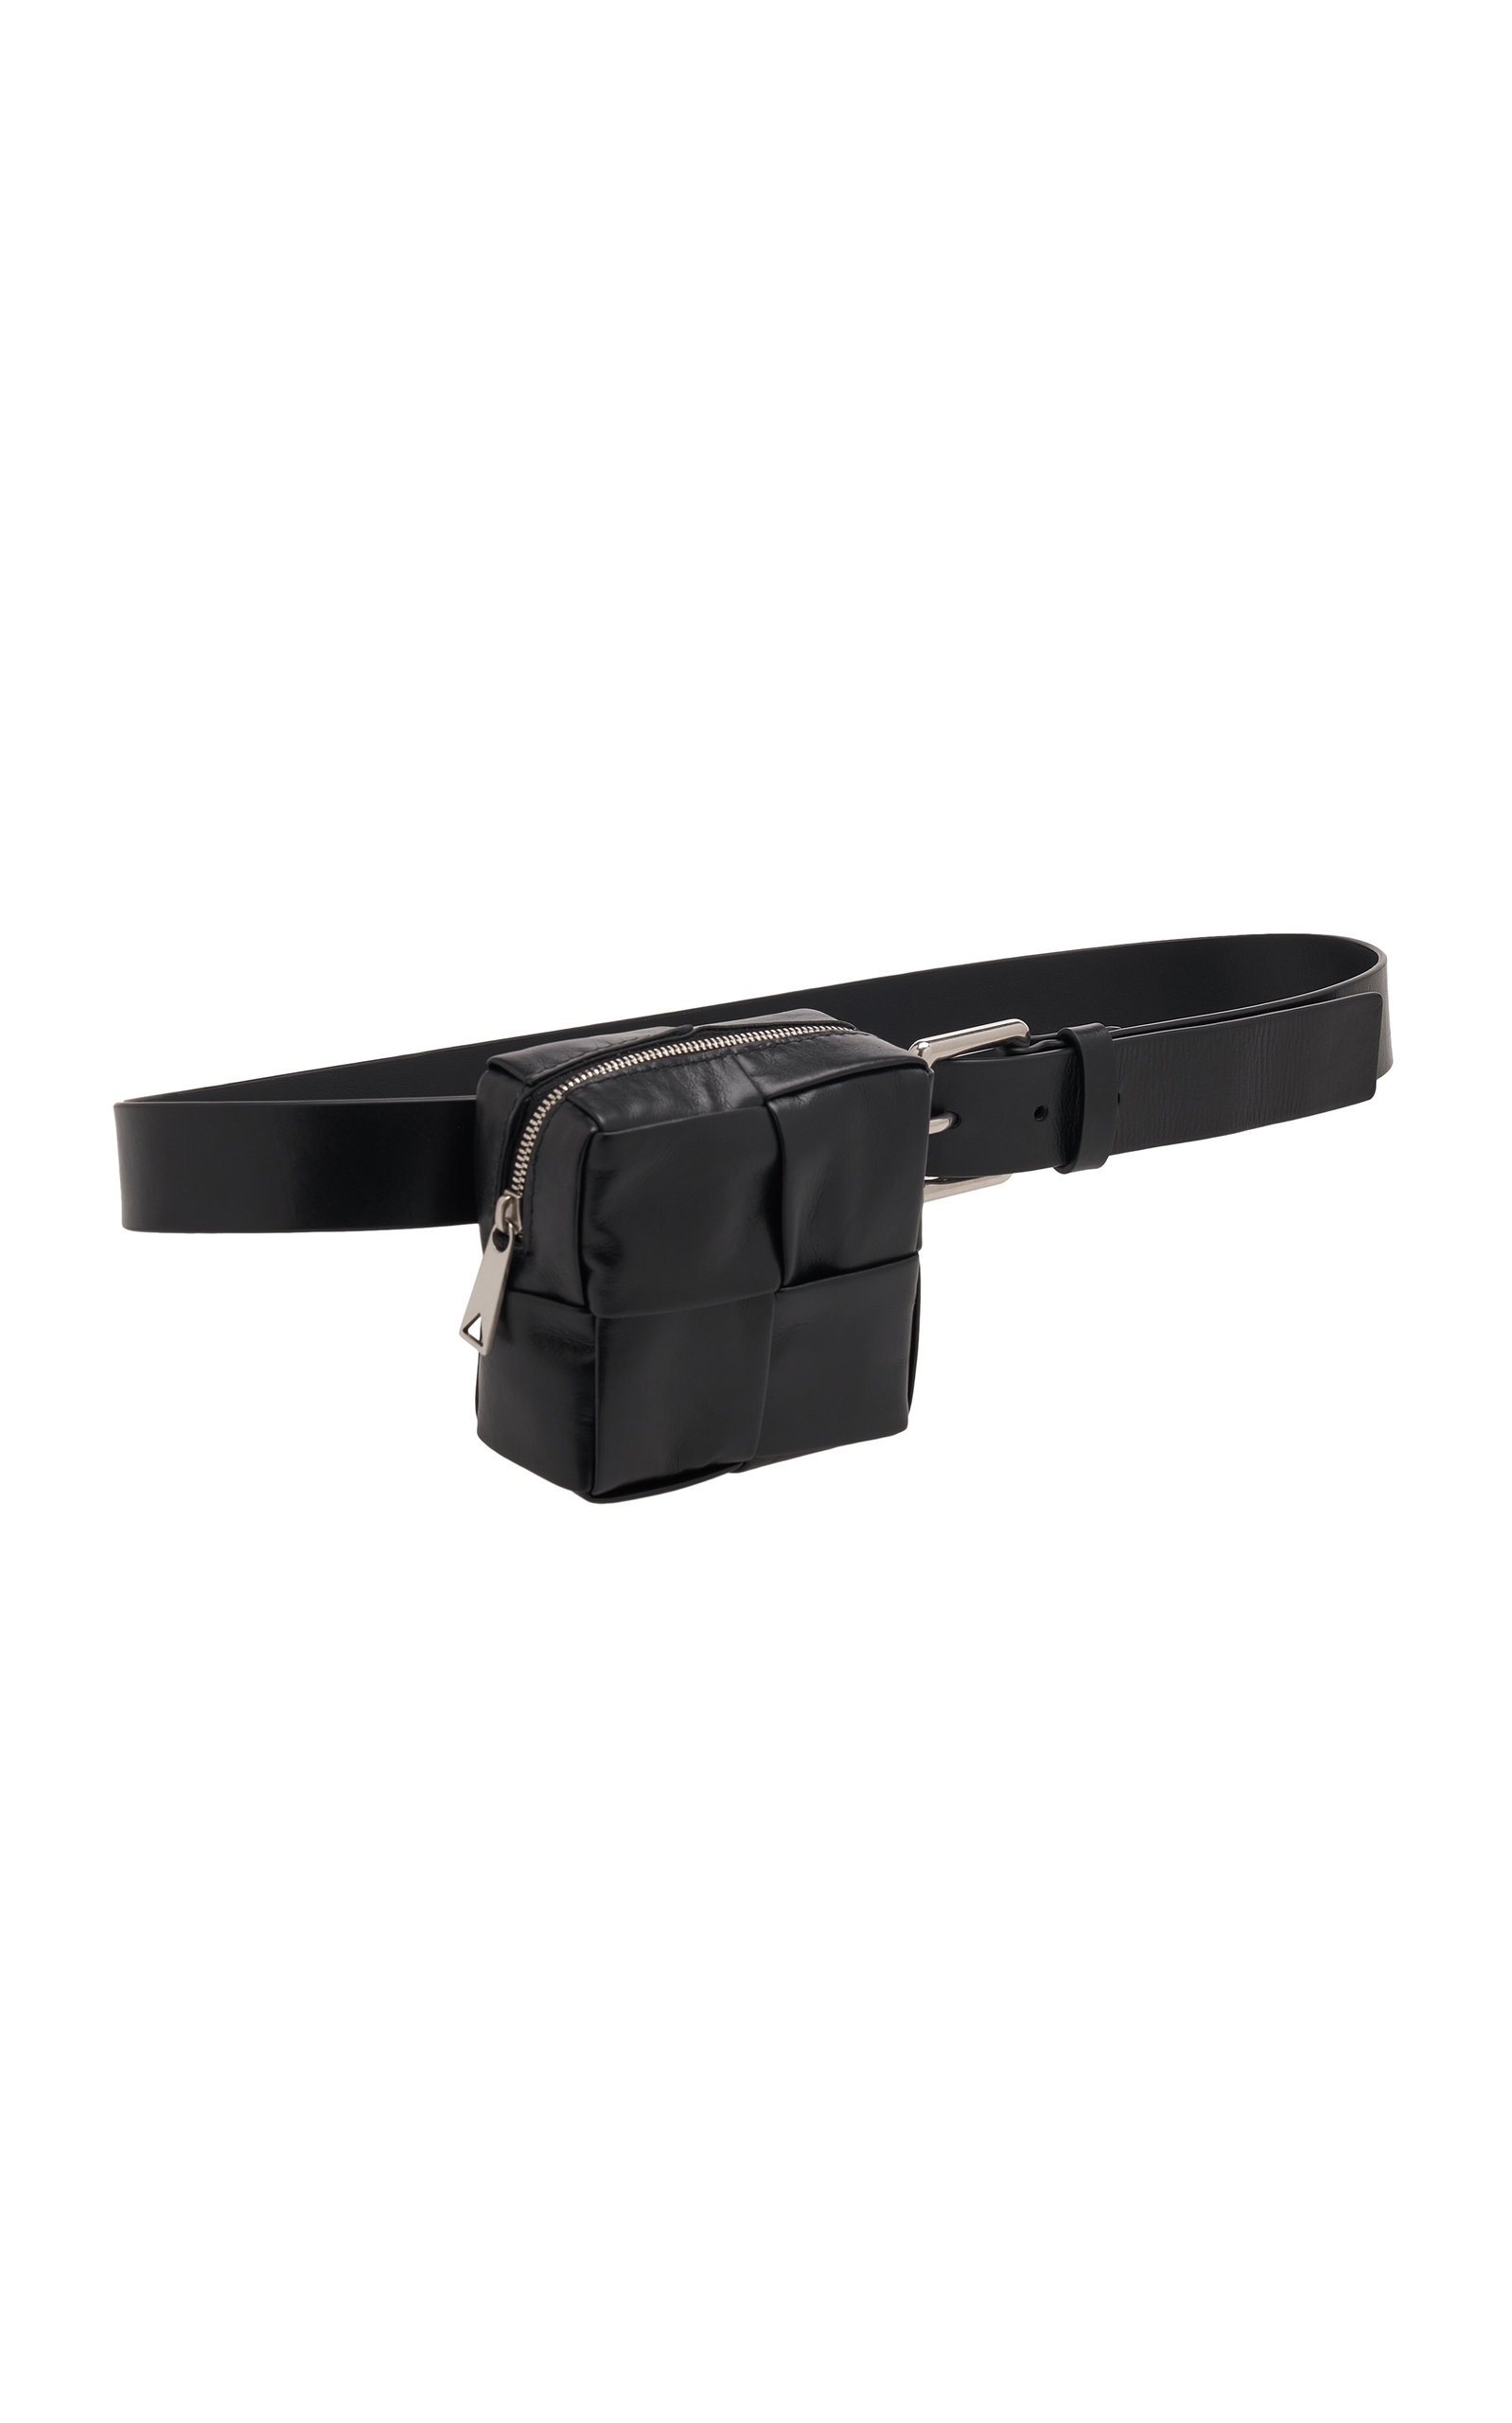 Cassette Pouch Leather Waist Belt black - 3